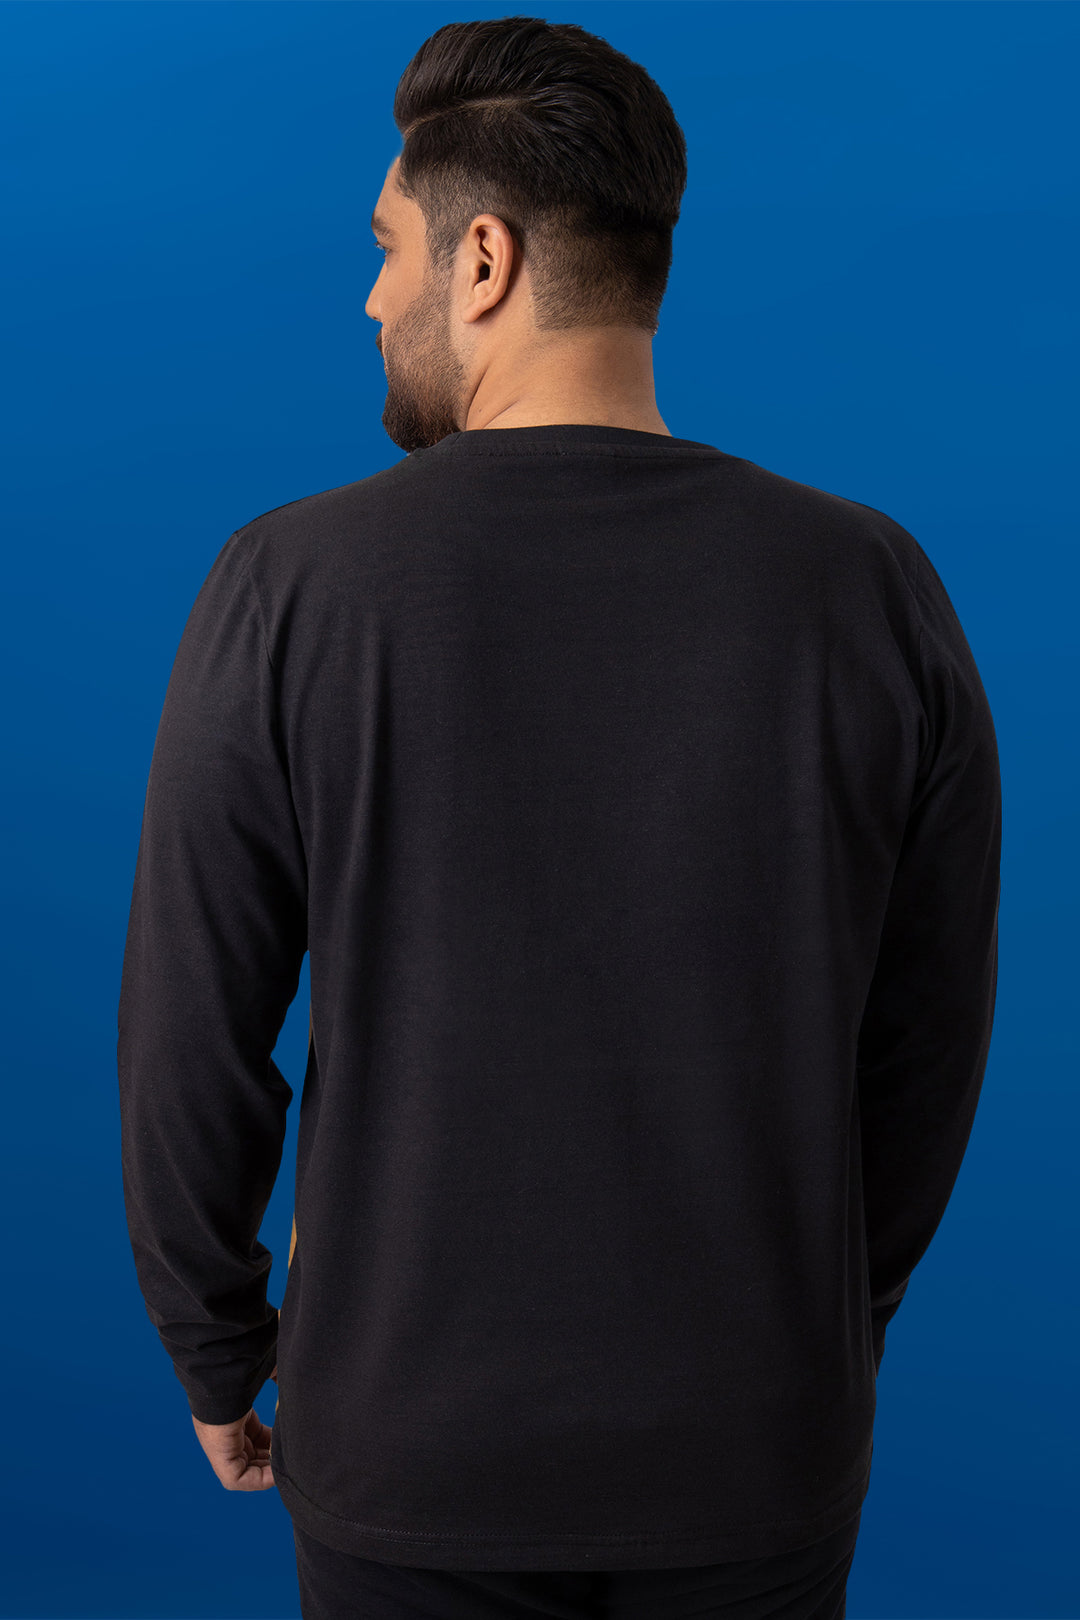 Rise Black & Brown Full Sleeve T-Shirt (Plus Size) - W23 - MT0280P